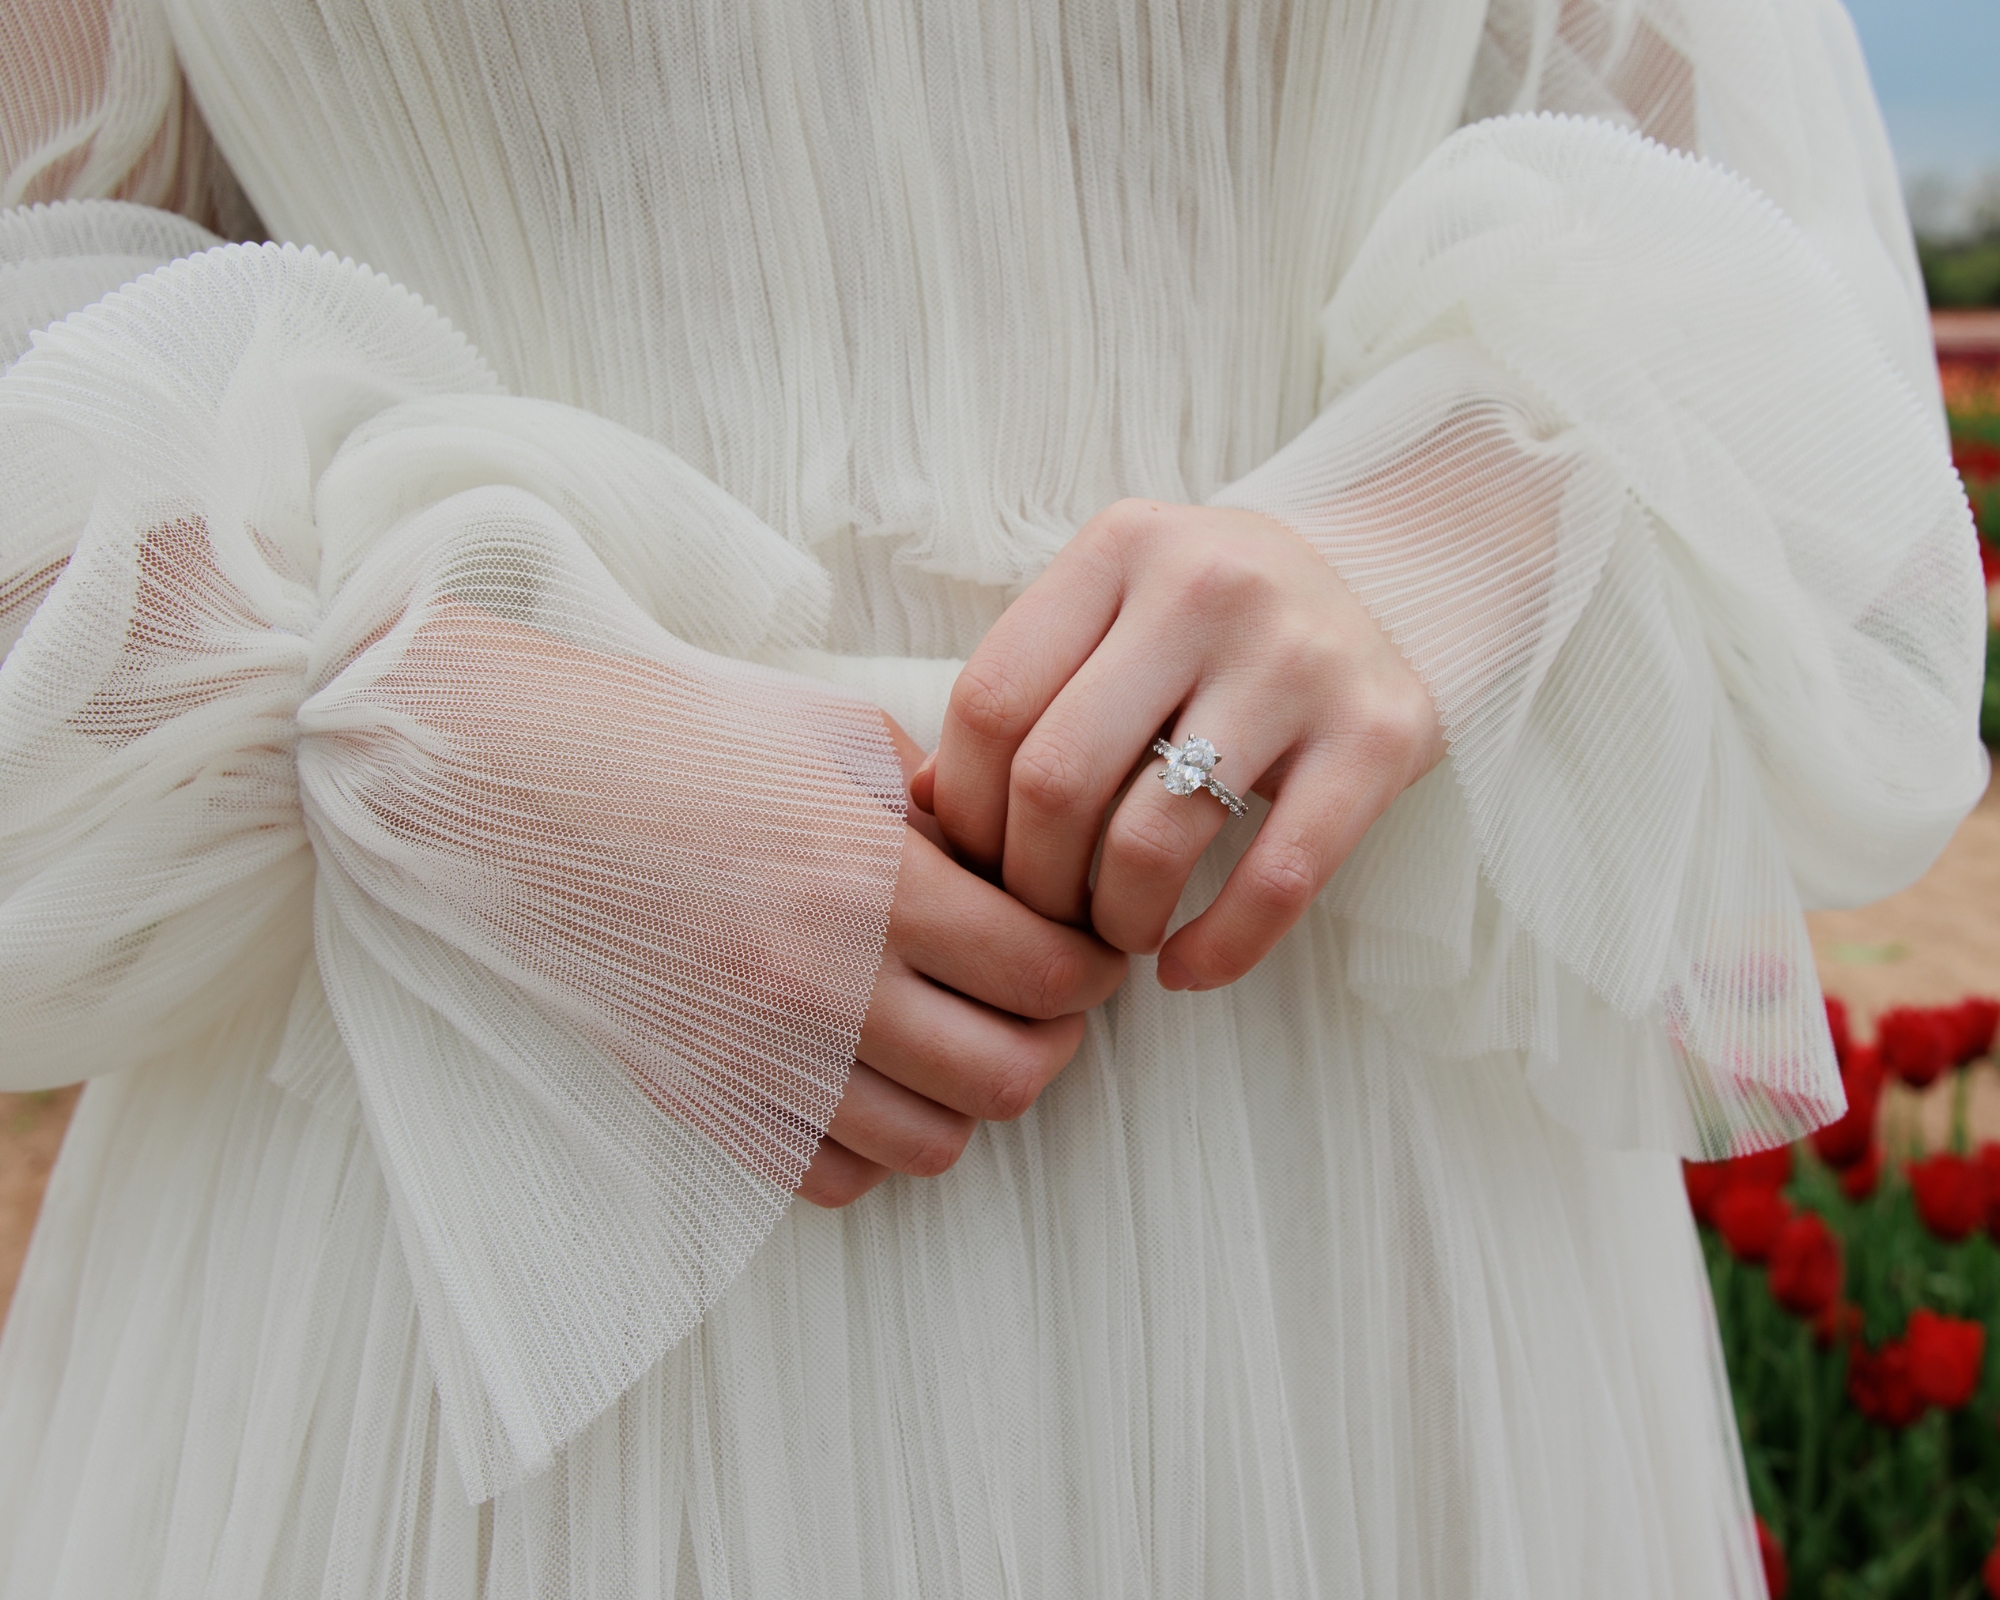 Bride showcasing her engagement ring